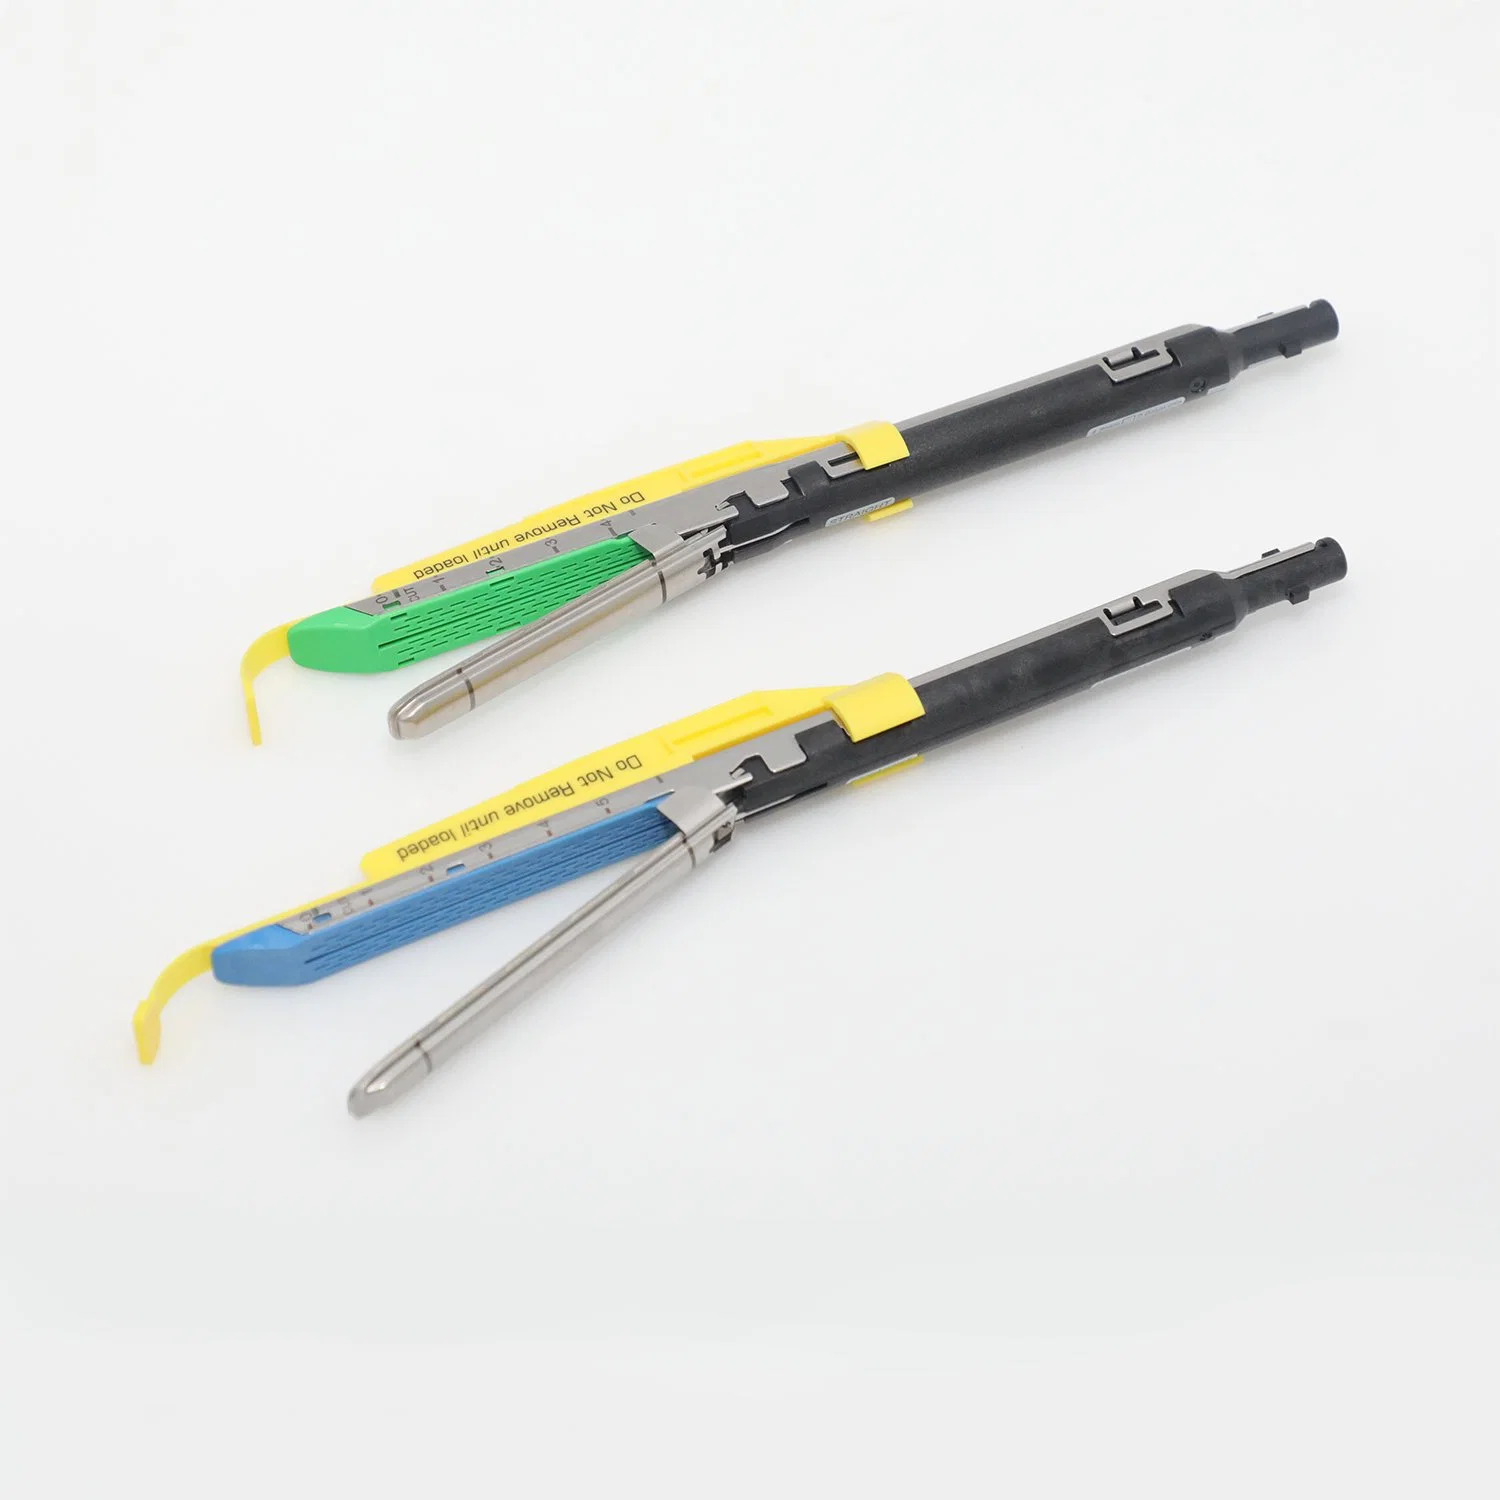 Disposable Laparoscopic Instruments Endo Stapler Endoscope Surgical Stapler